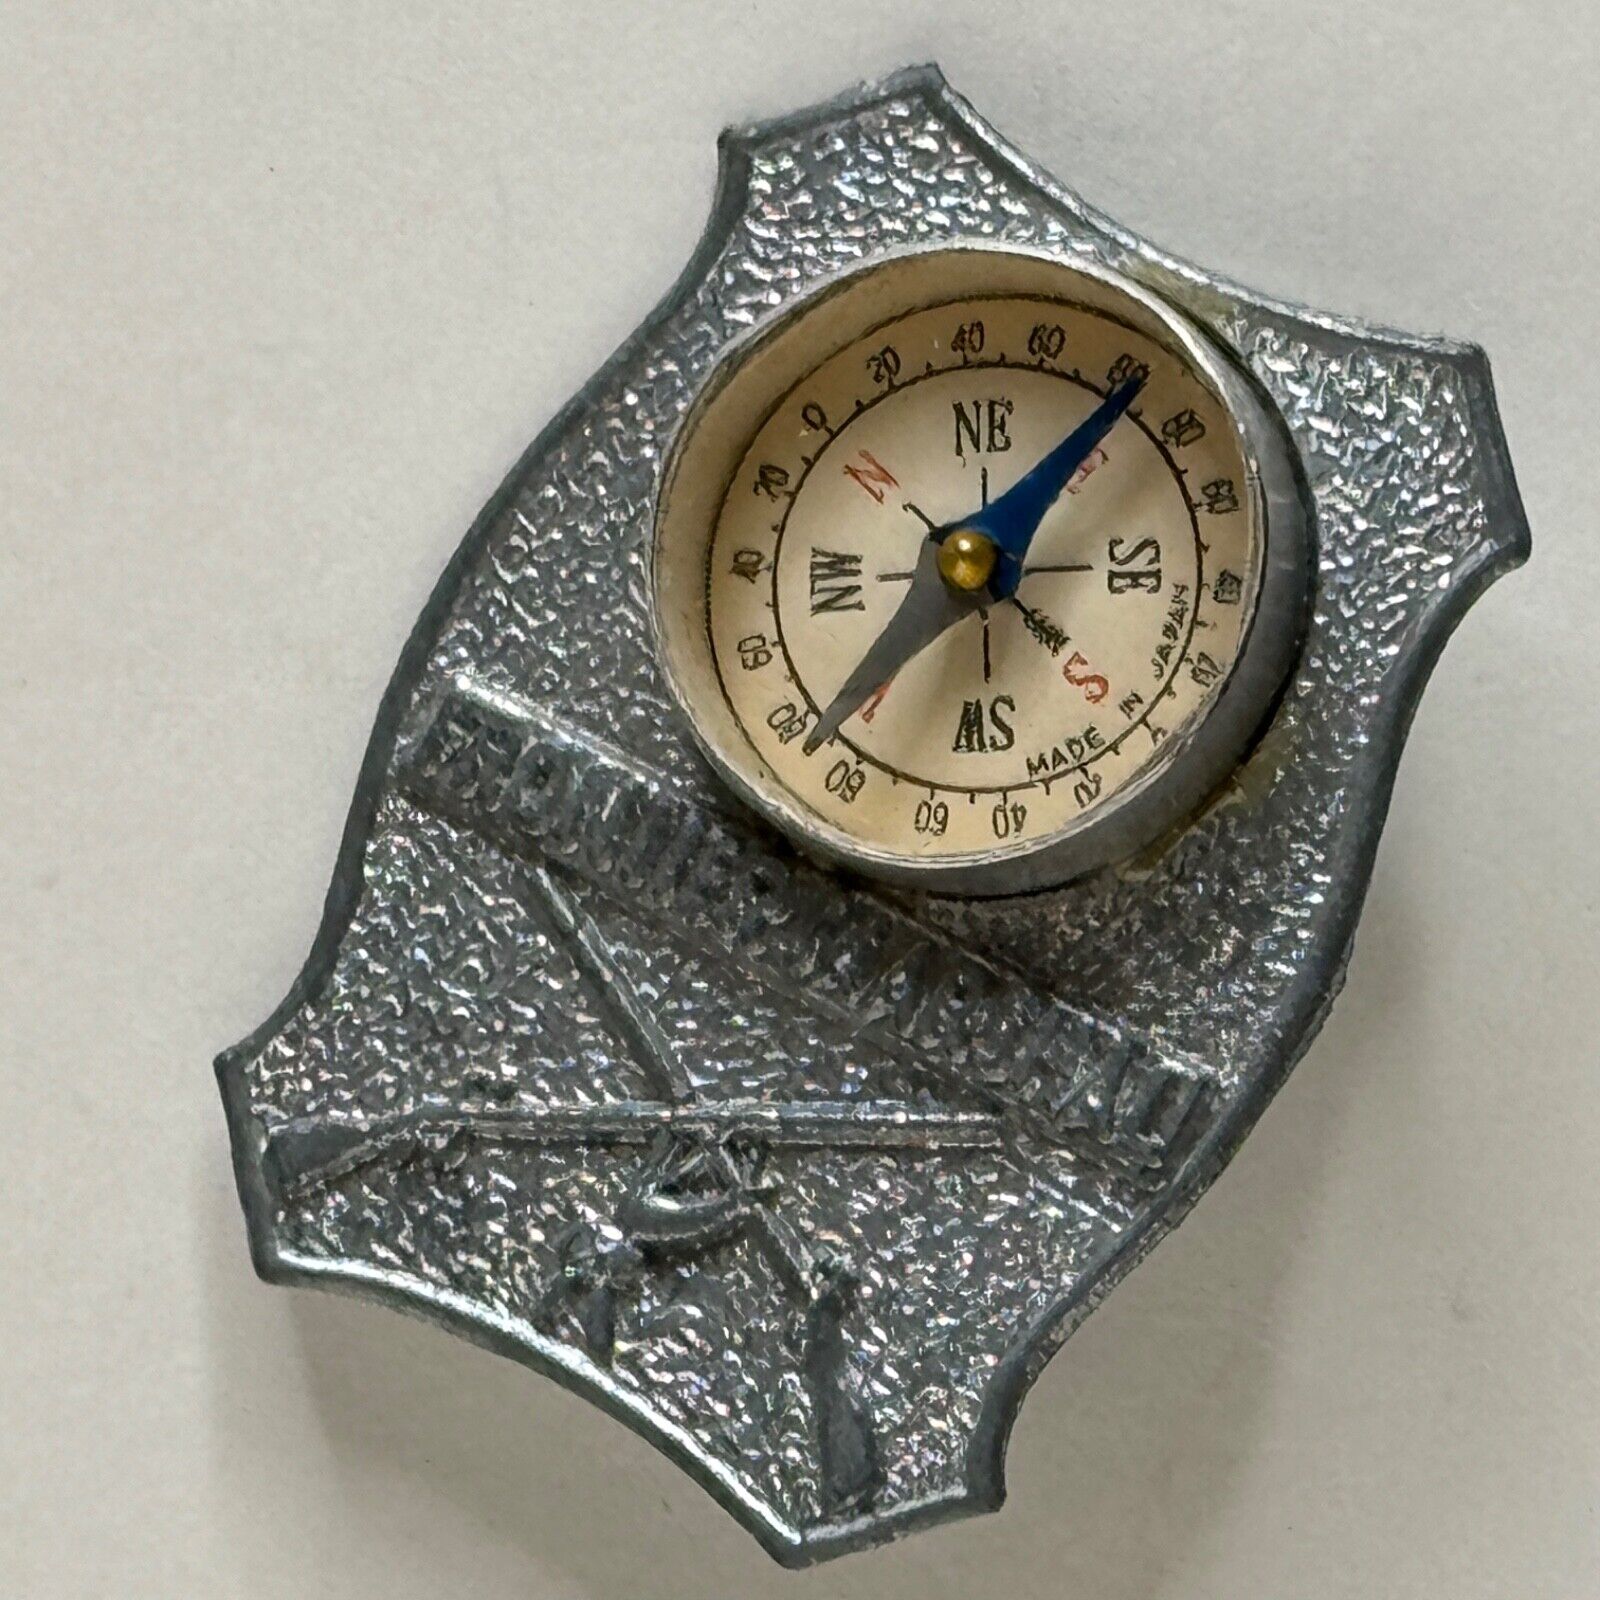 RARE Vintage 1950s Disneyland Souvenir Frontierland Compass Pin - Cream